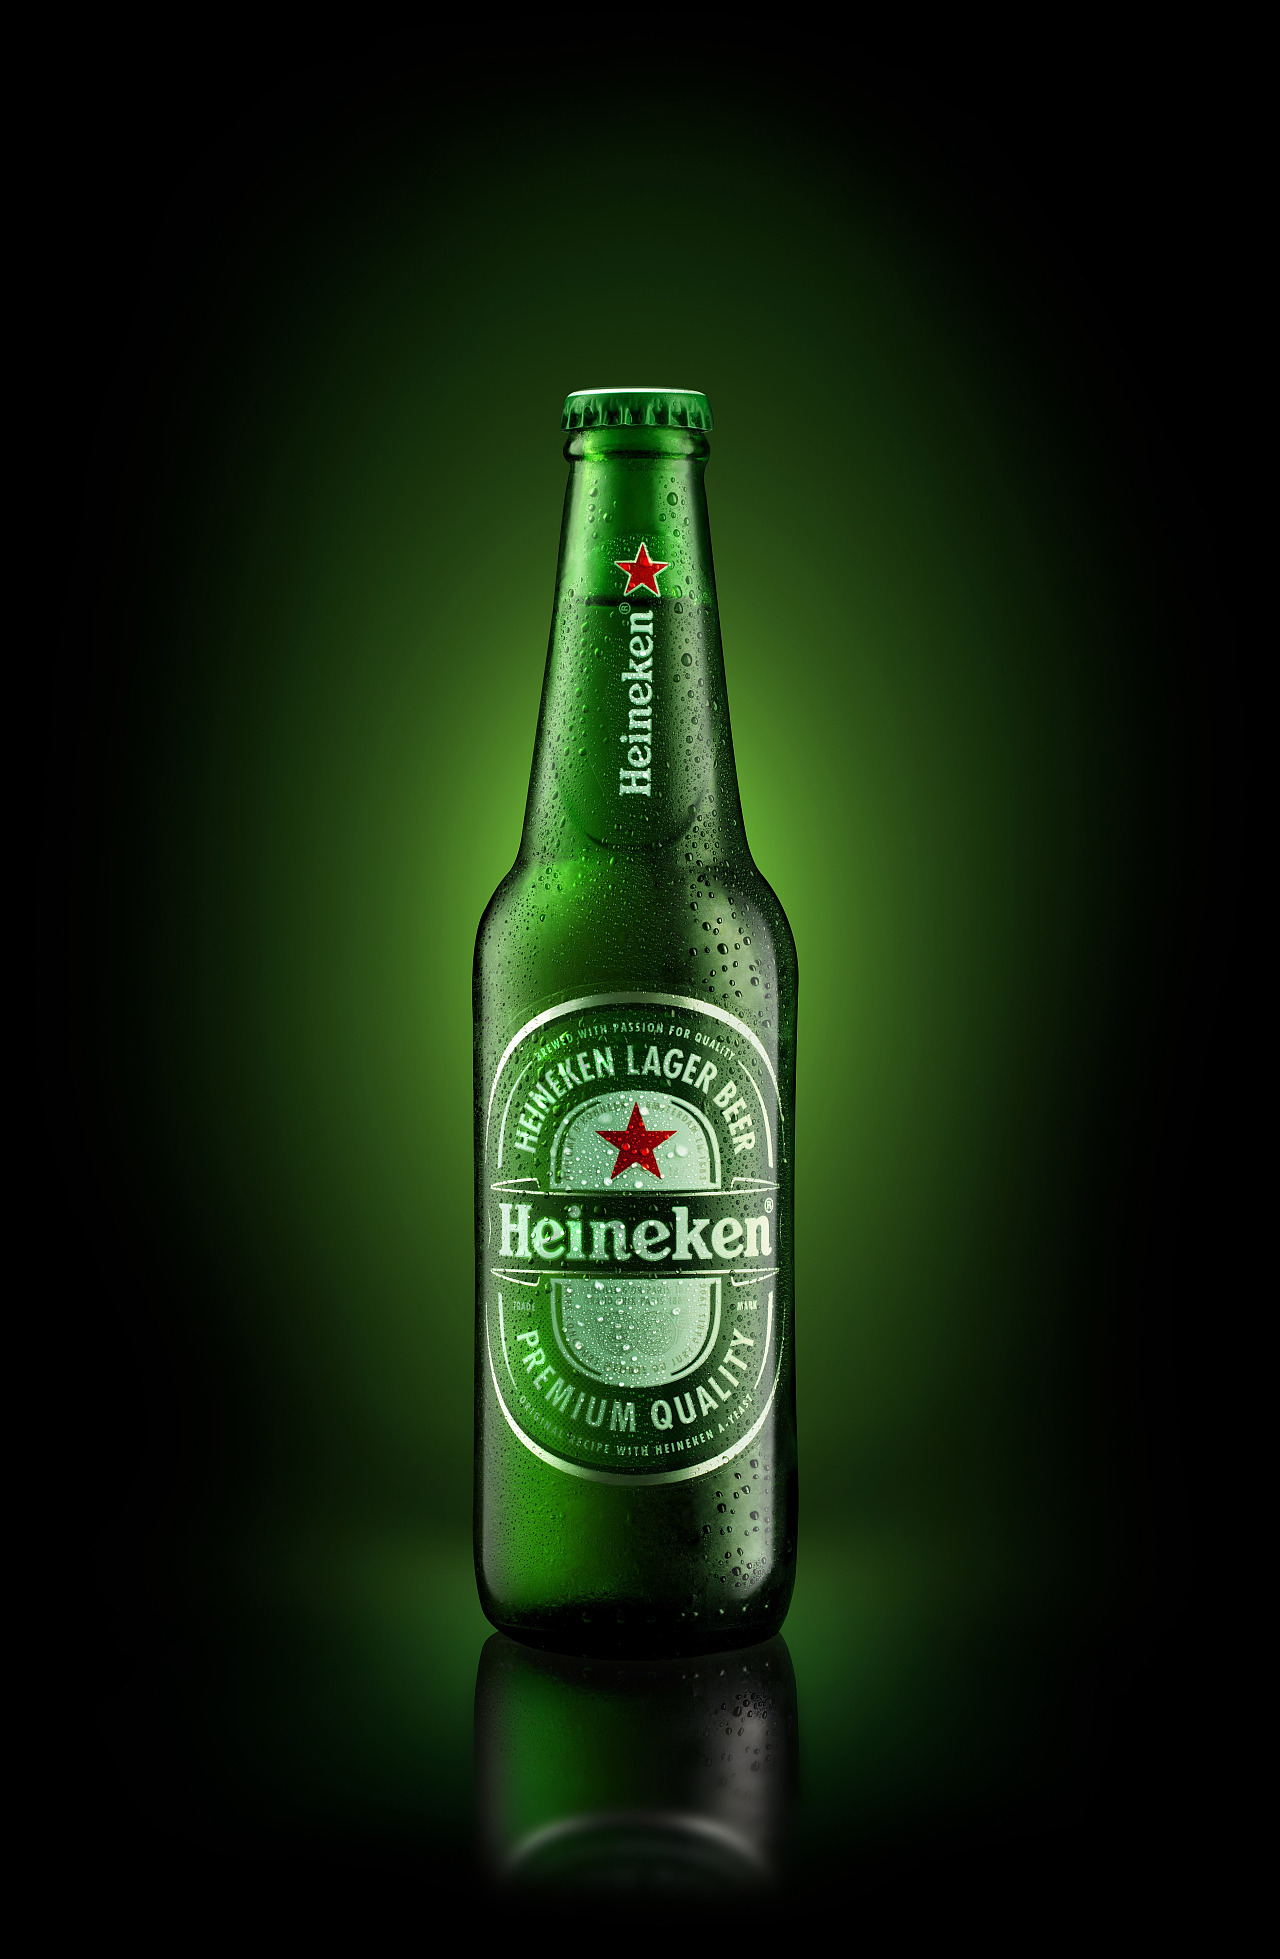 Heineken（喜力啤酒）|摄影|产品摄影|摄影师李俊贤 - 原创作品 - 站酷 (ZCOOL)